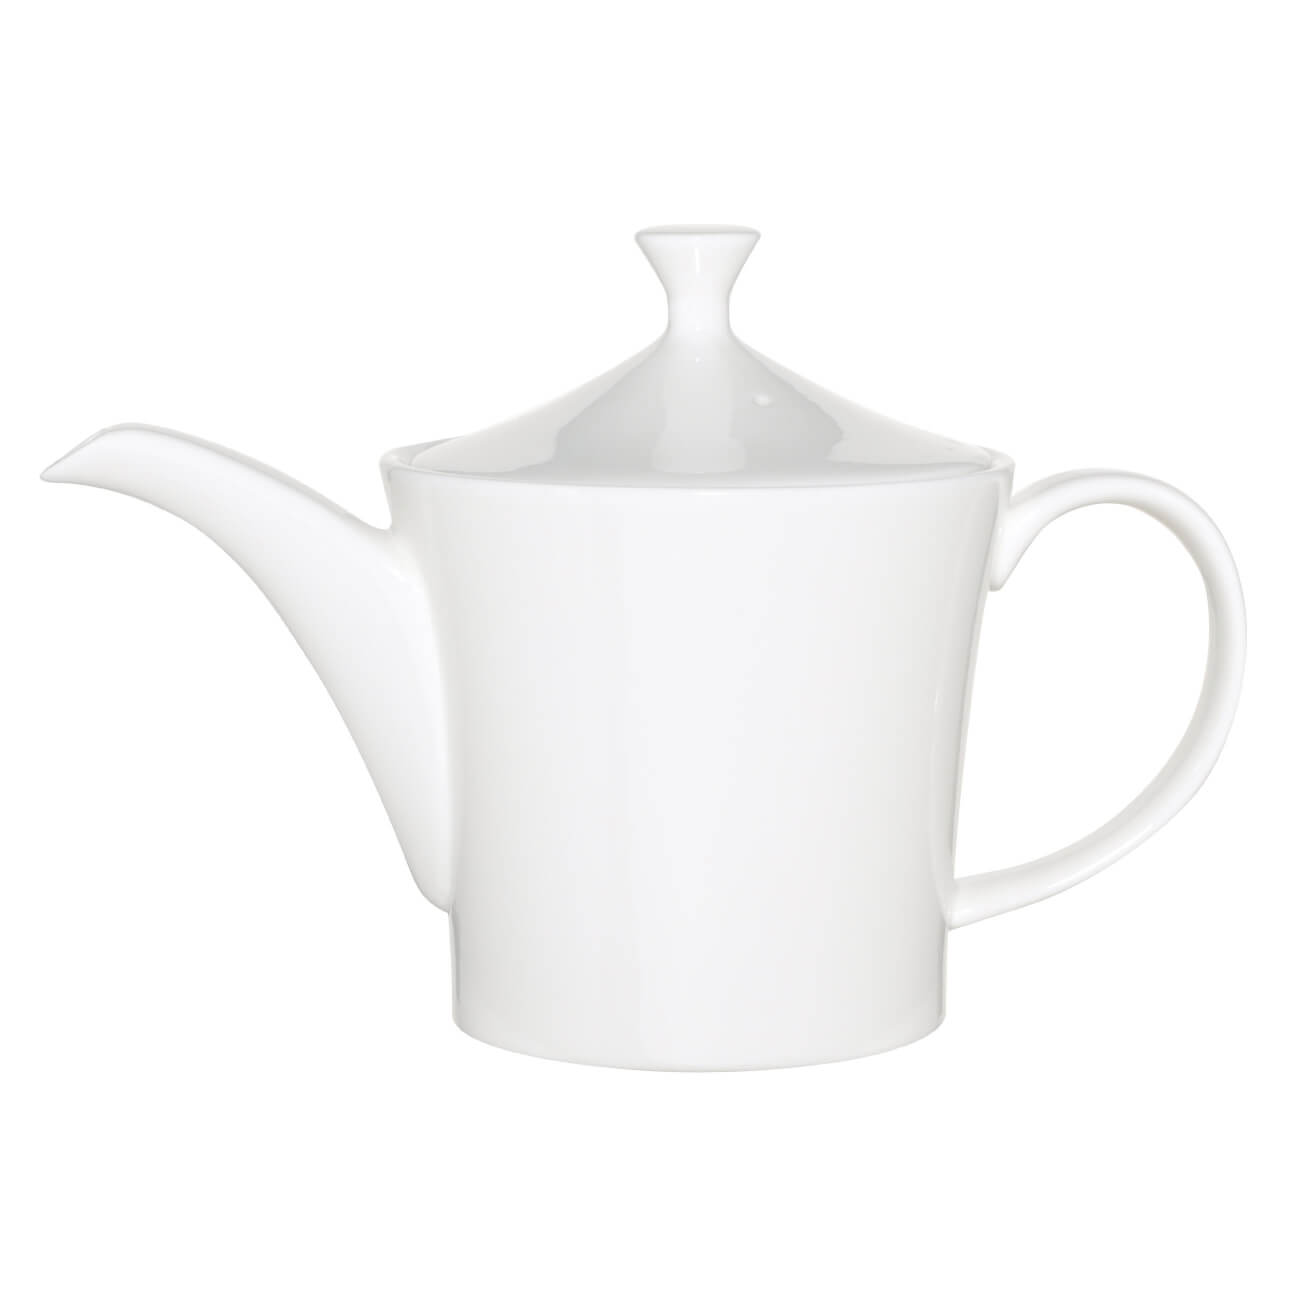 Чайник заварочный, 800 мл, фарфор F, белый, Ideal white чайник sonnen